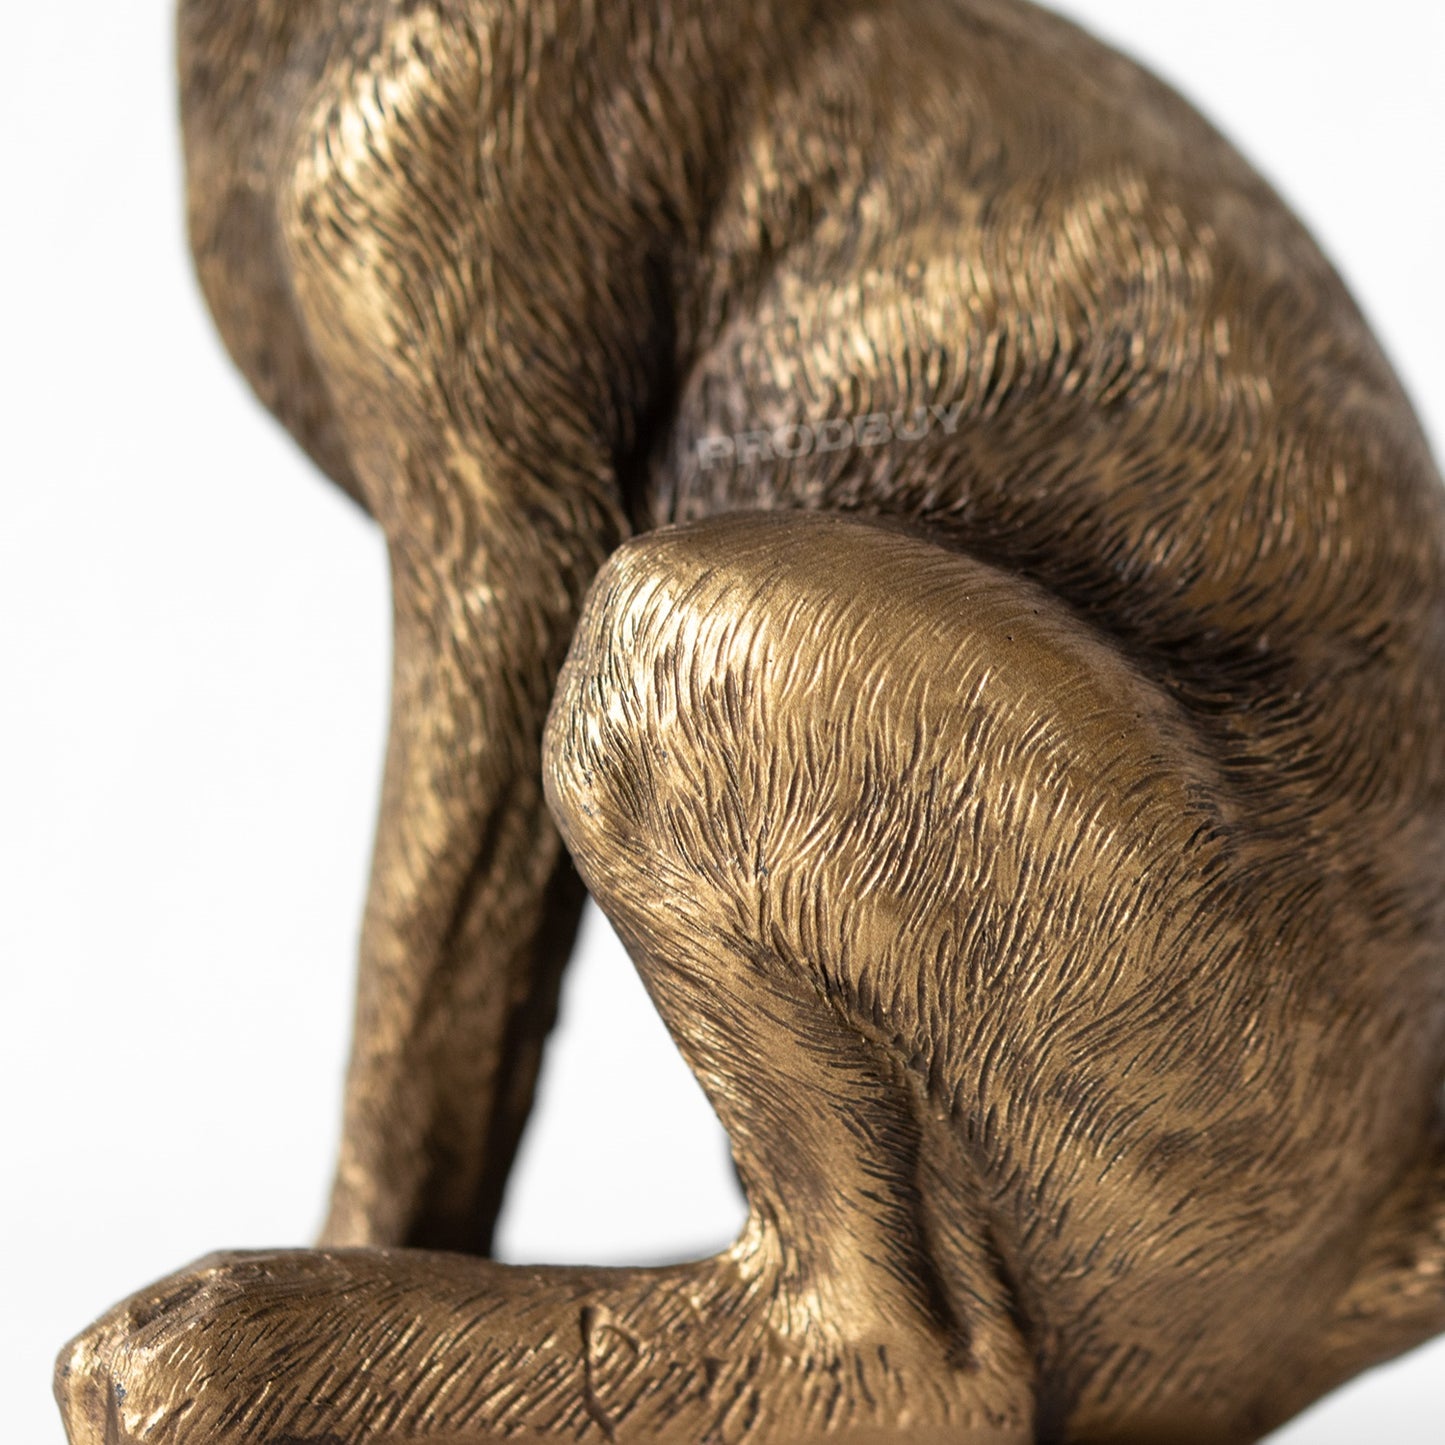 Small Bronze Resin Sitting Hare Ornament